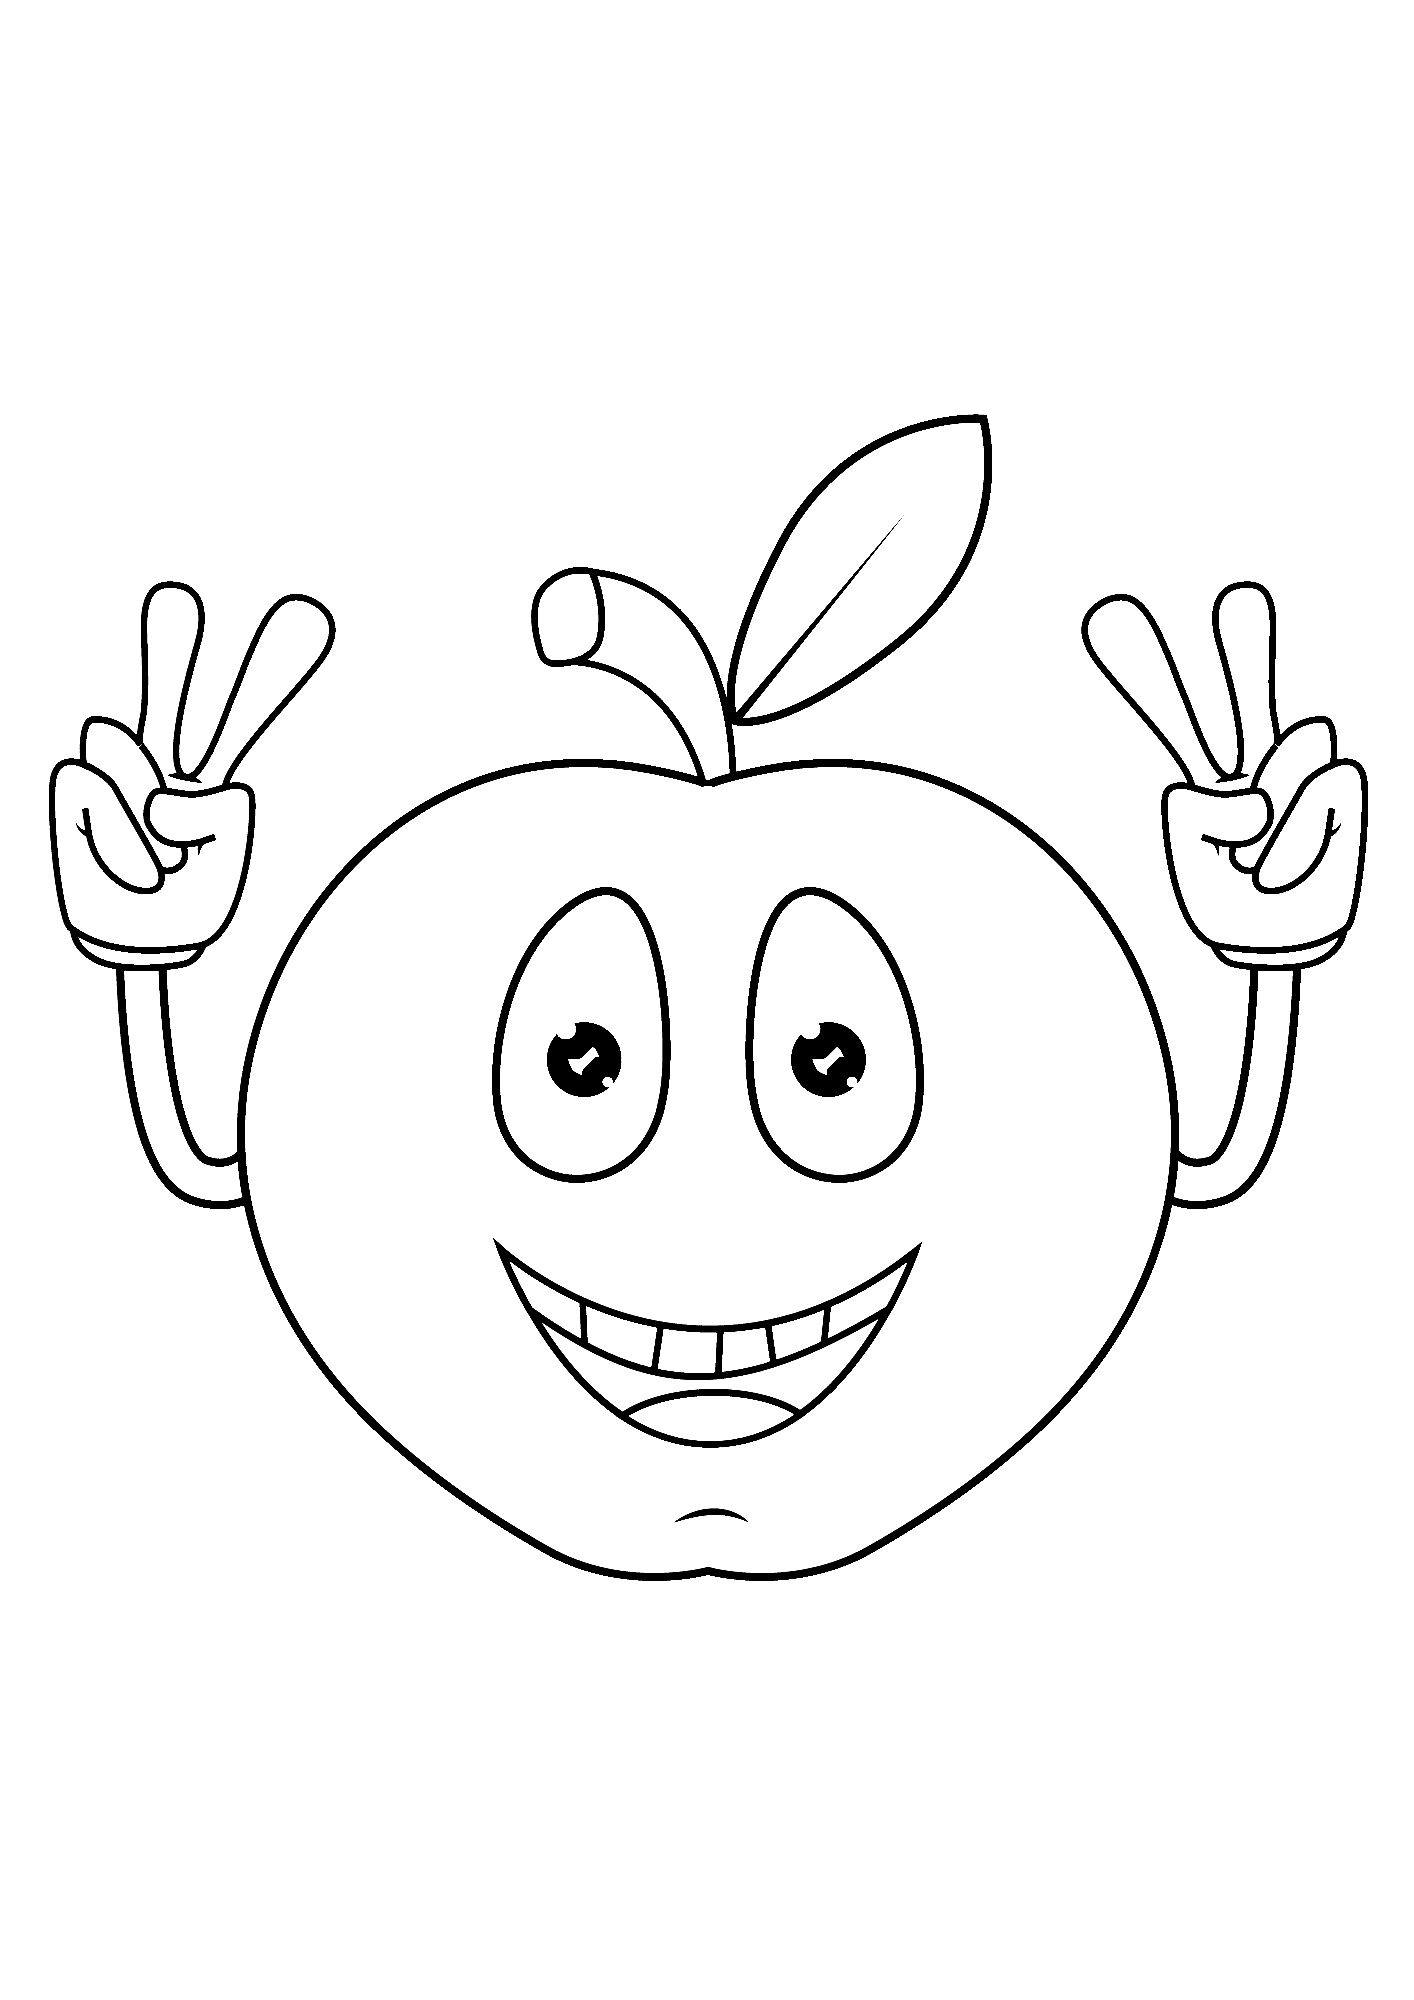 Cute Apple Cartoon Coloring Page